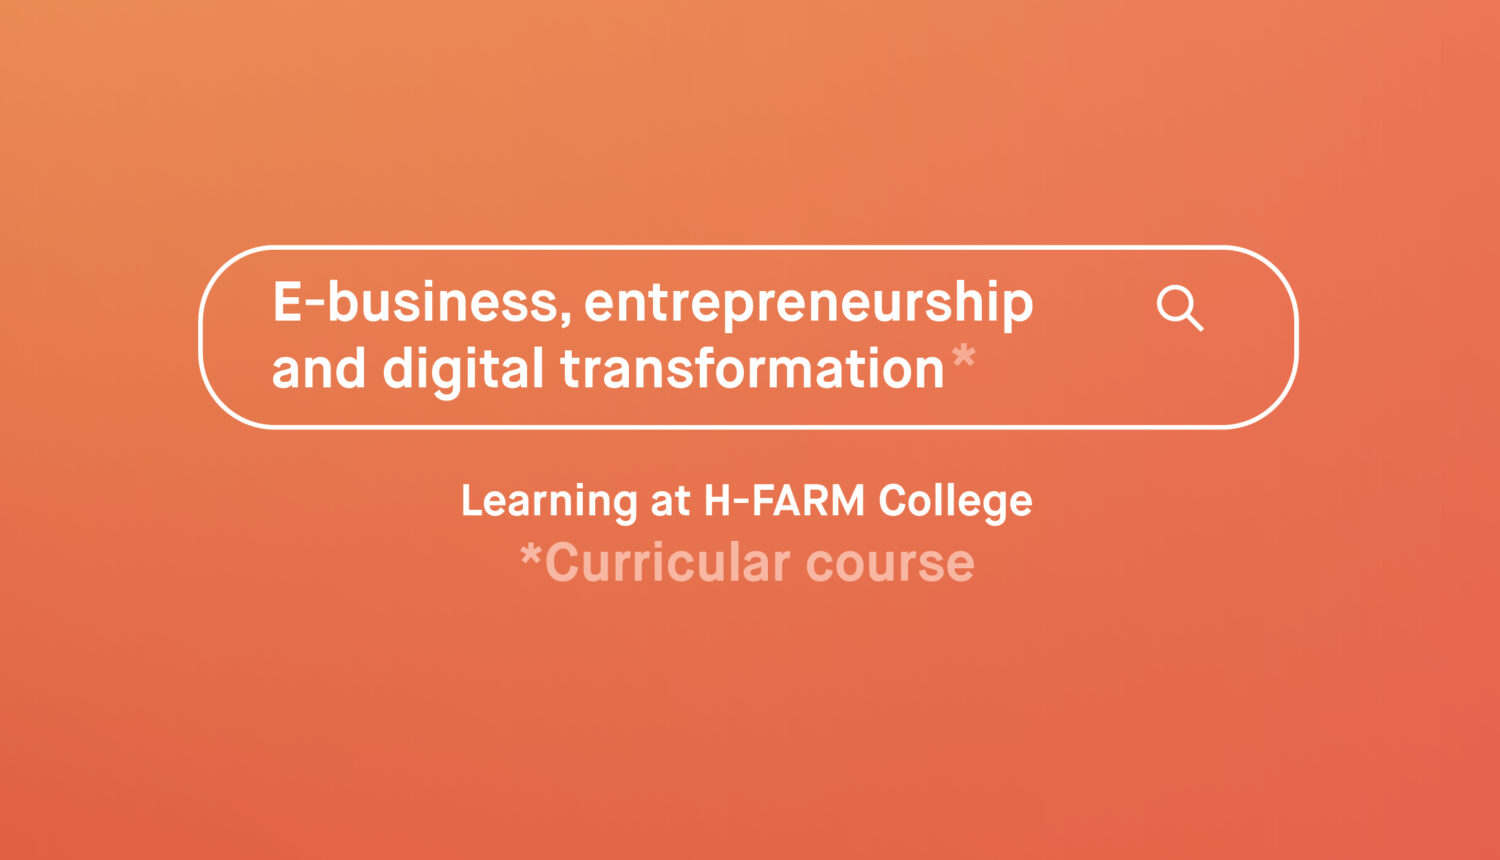 E-business, entrepreneurship and digital transformation